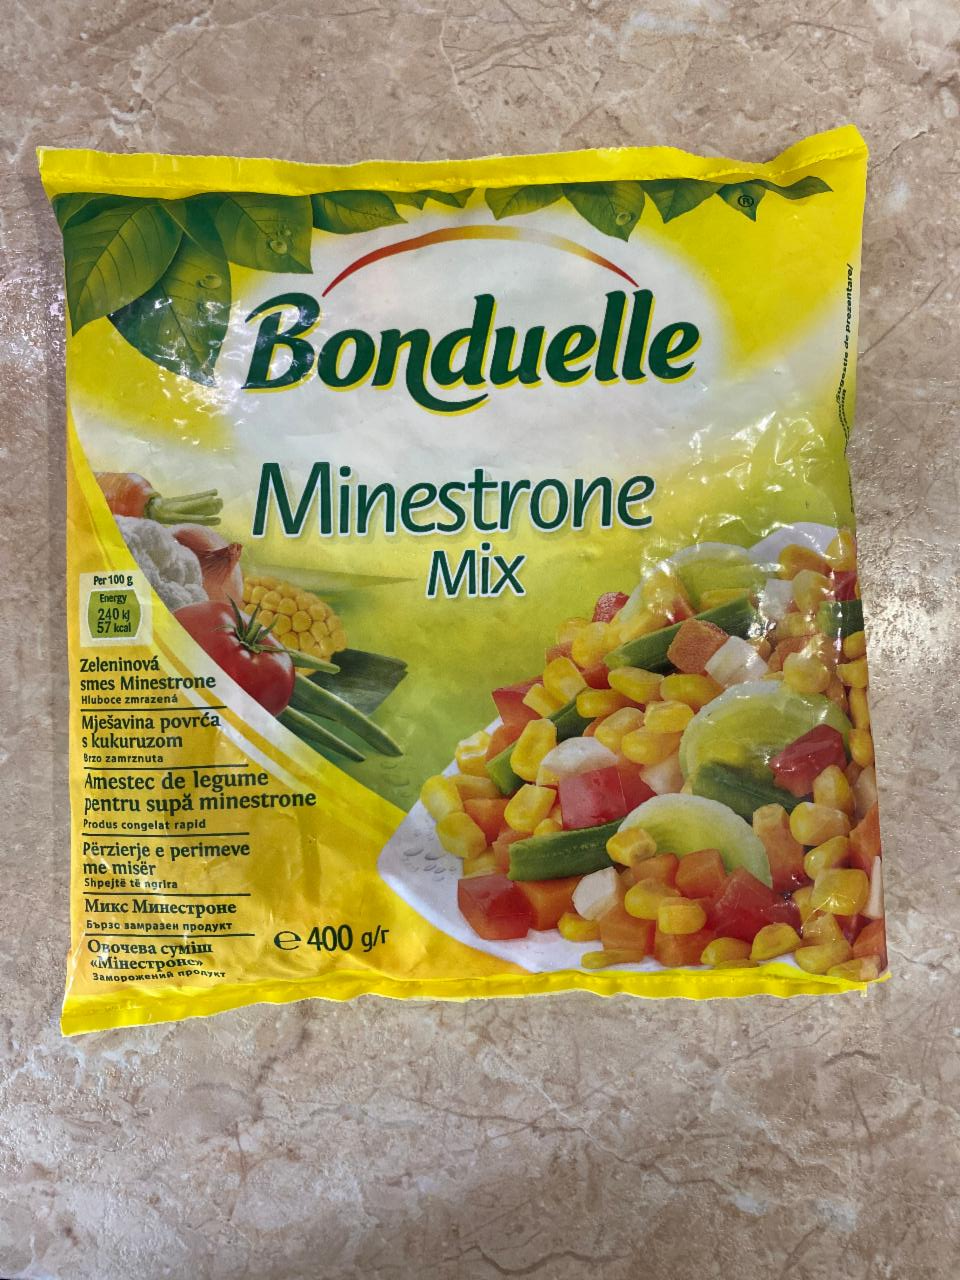 Фото - Minestrone Mix Bonduelle